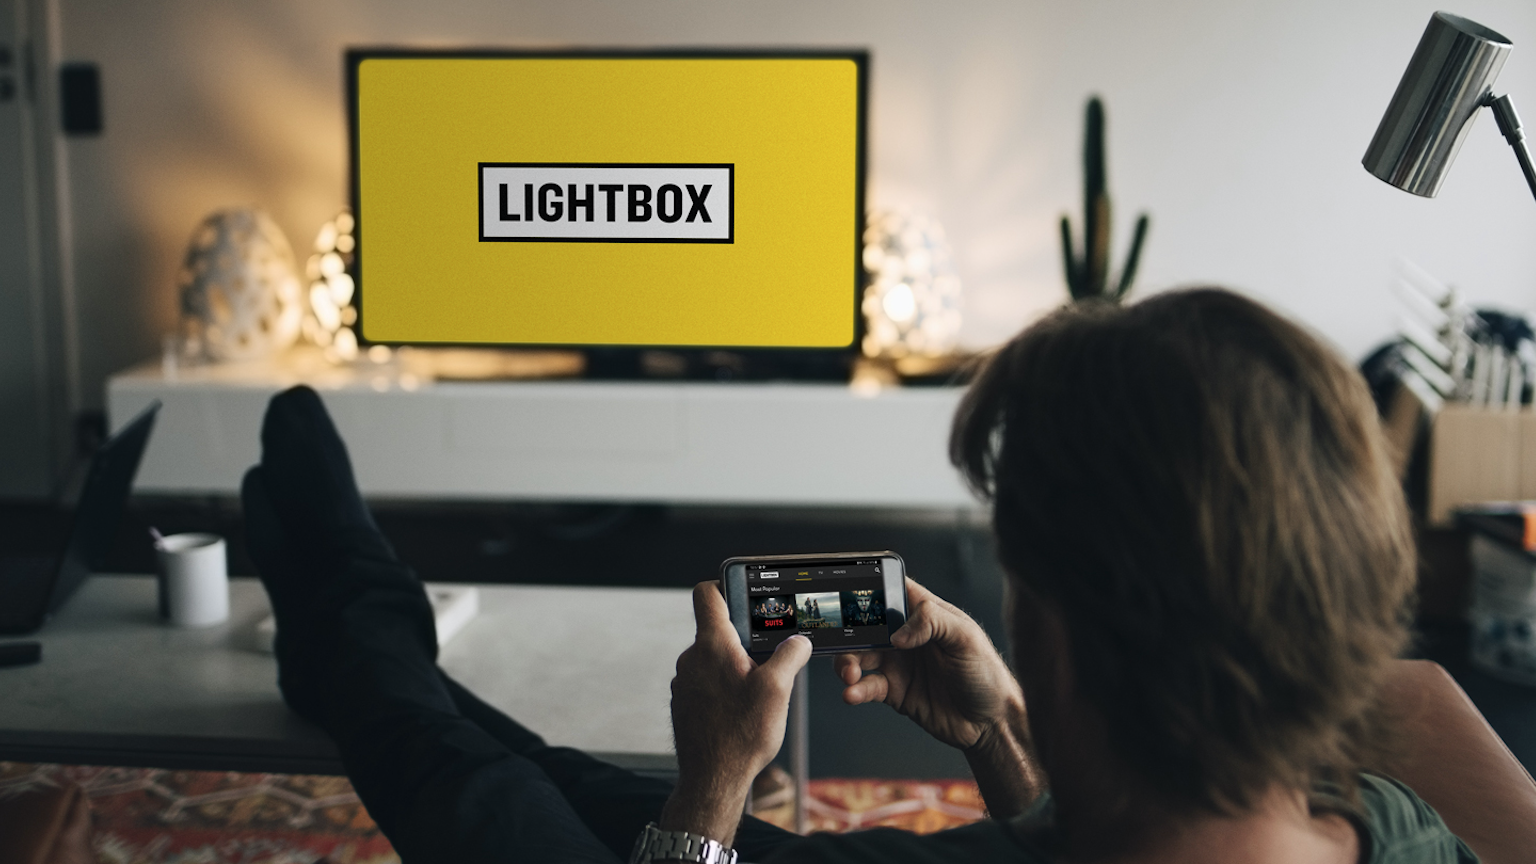 Lightbox.png